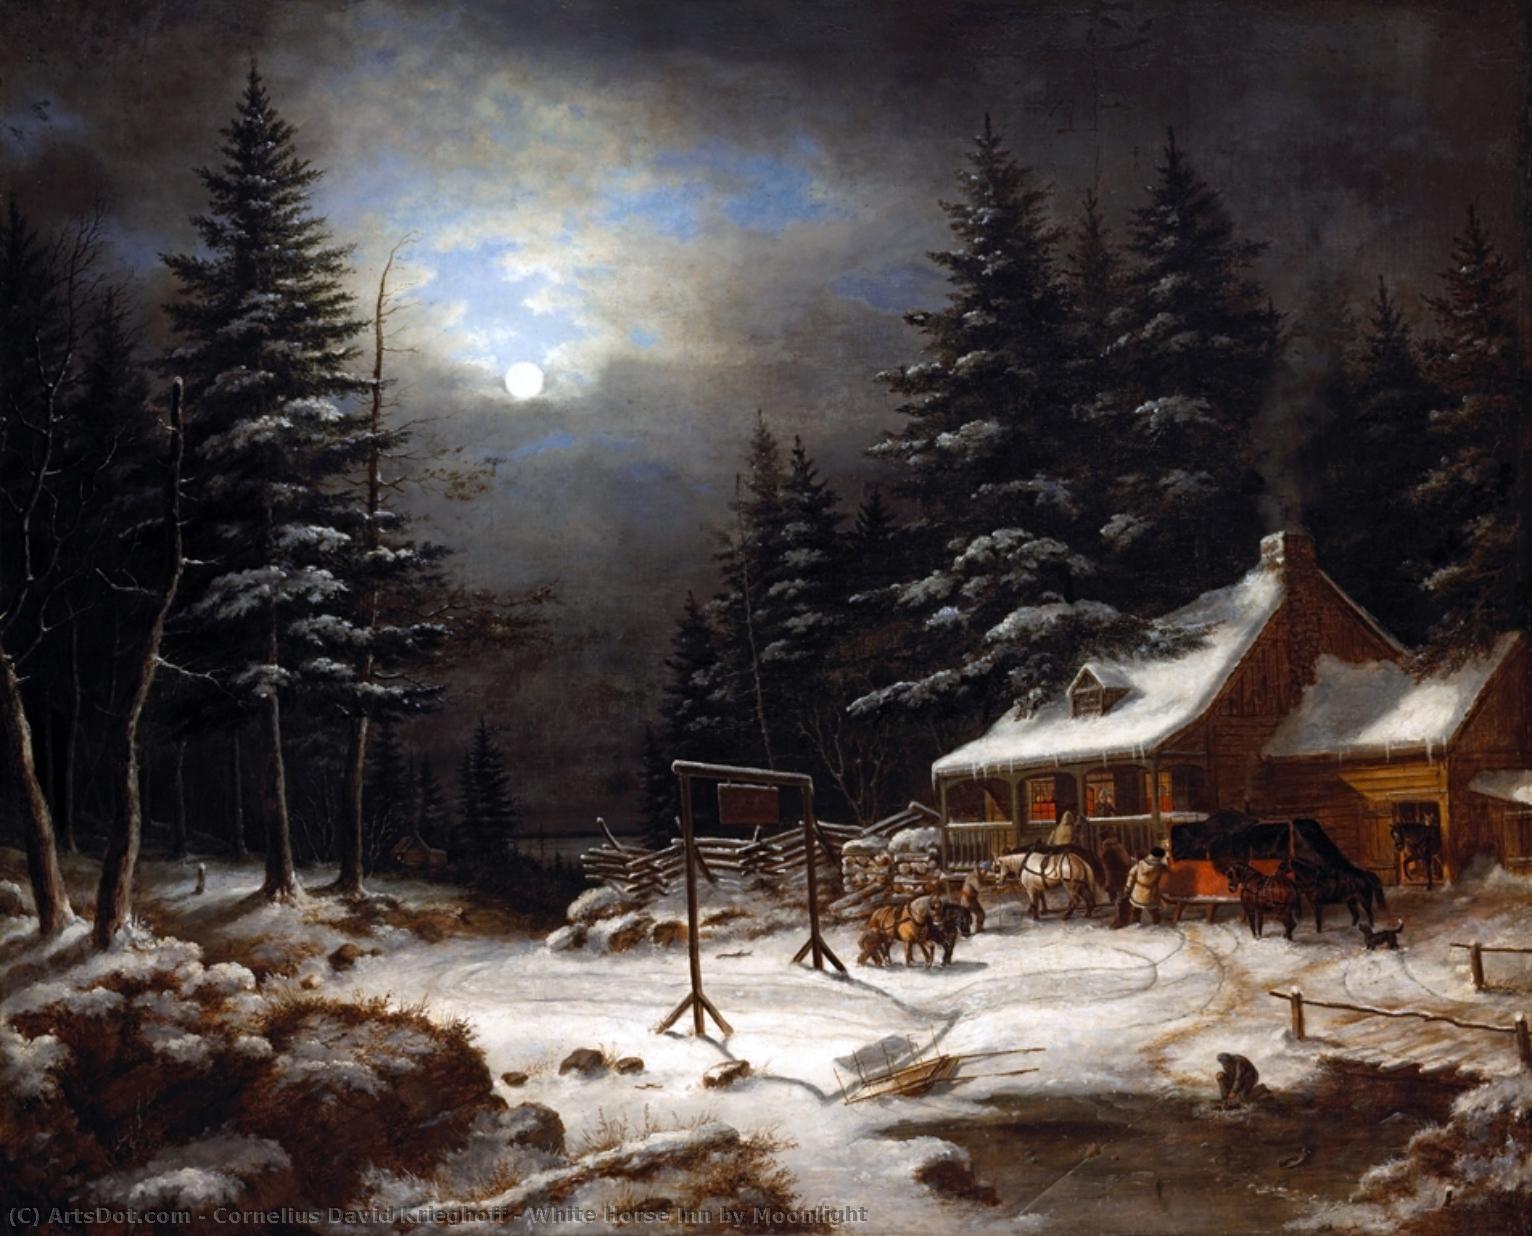 Buy Museum Art Reproductions White Horse Inn by Moonlight, 1851 by Cornelius David Krieghoff (1815-1872, Netherlands) | ArtsDot.com